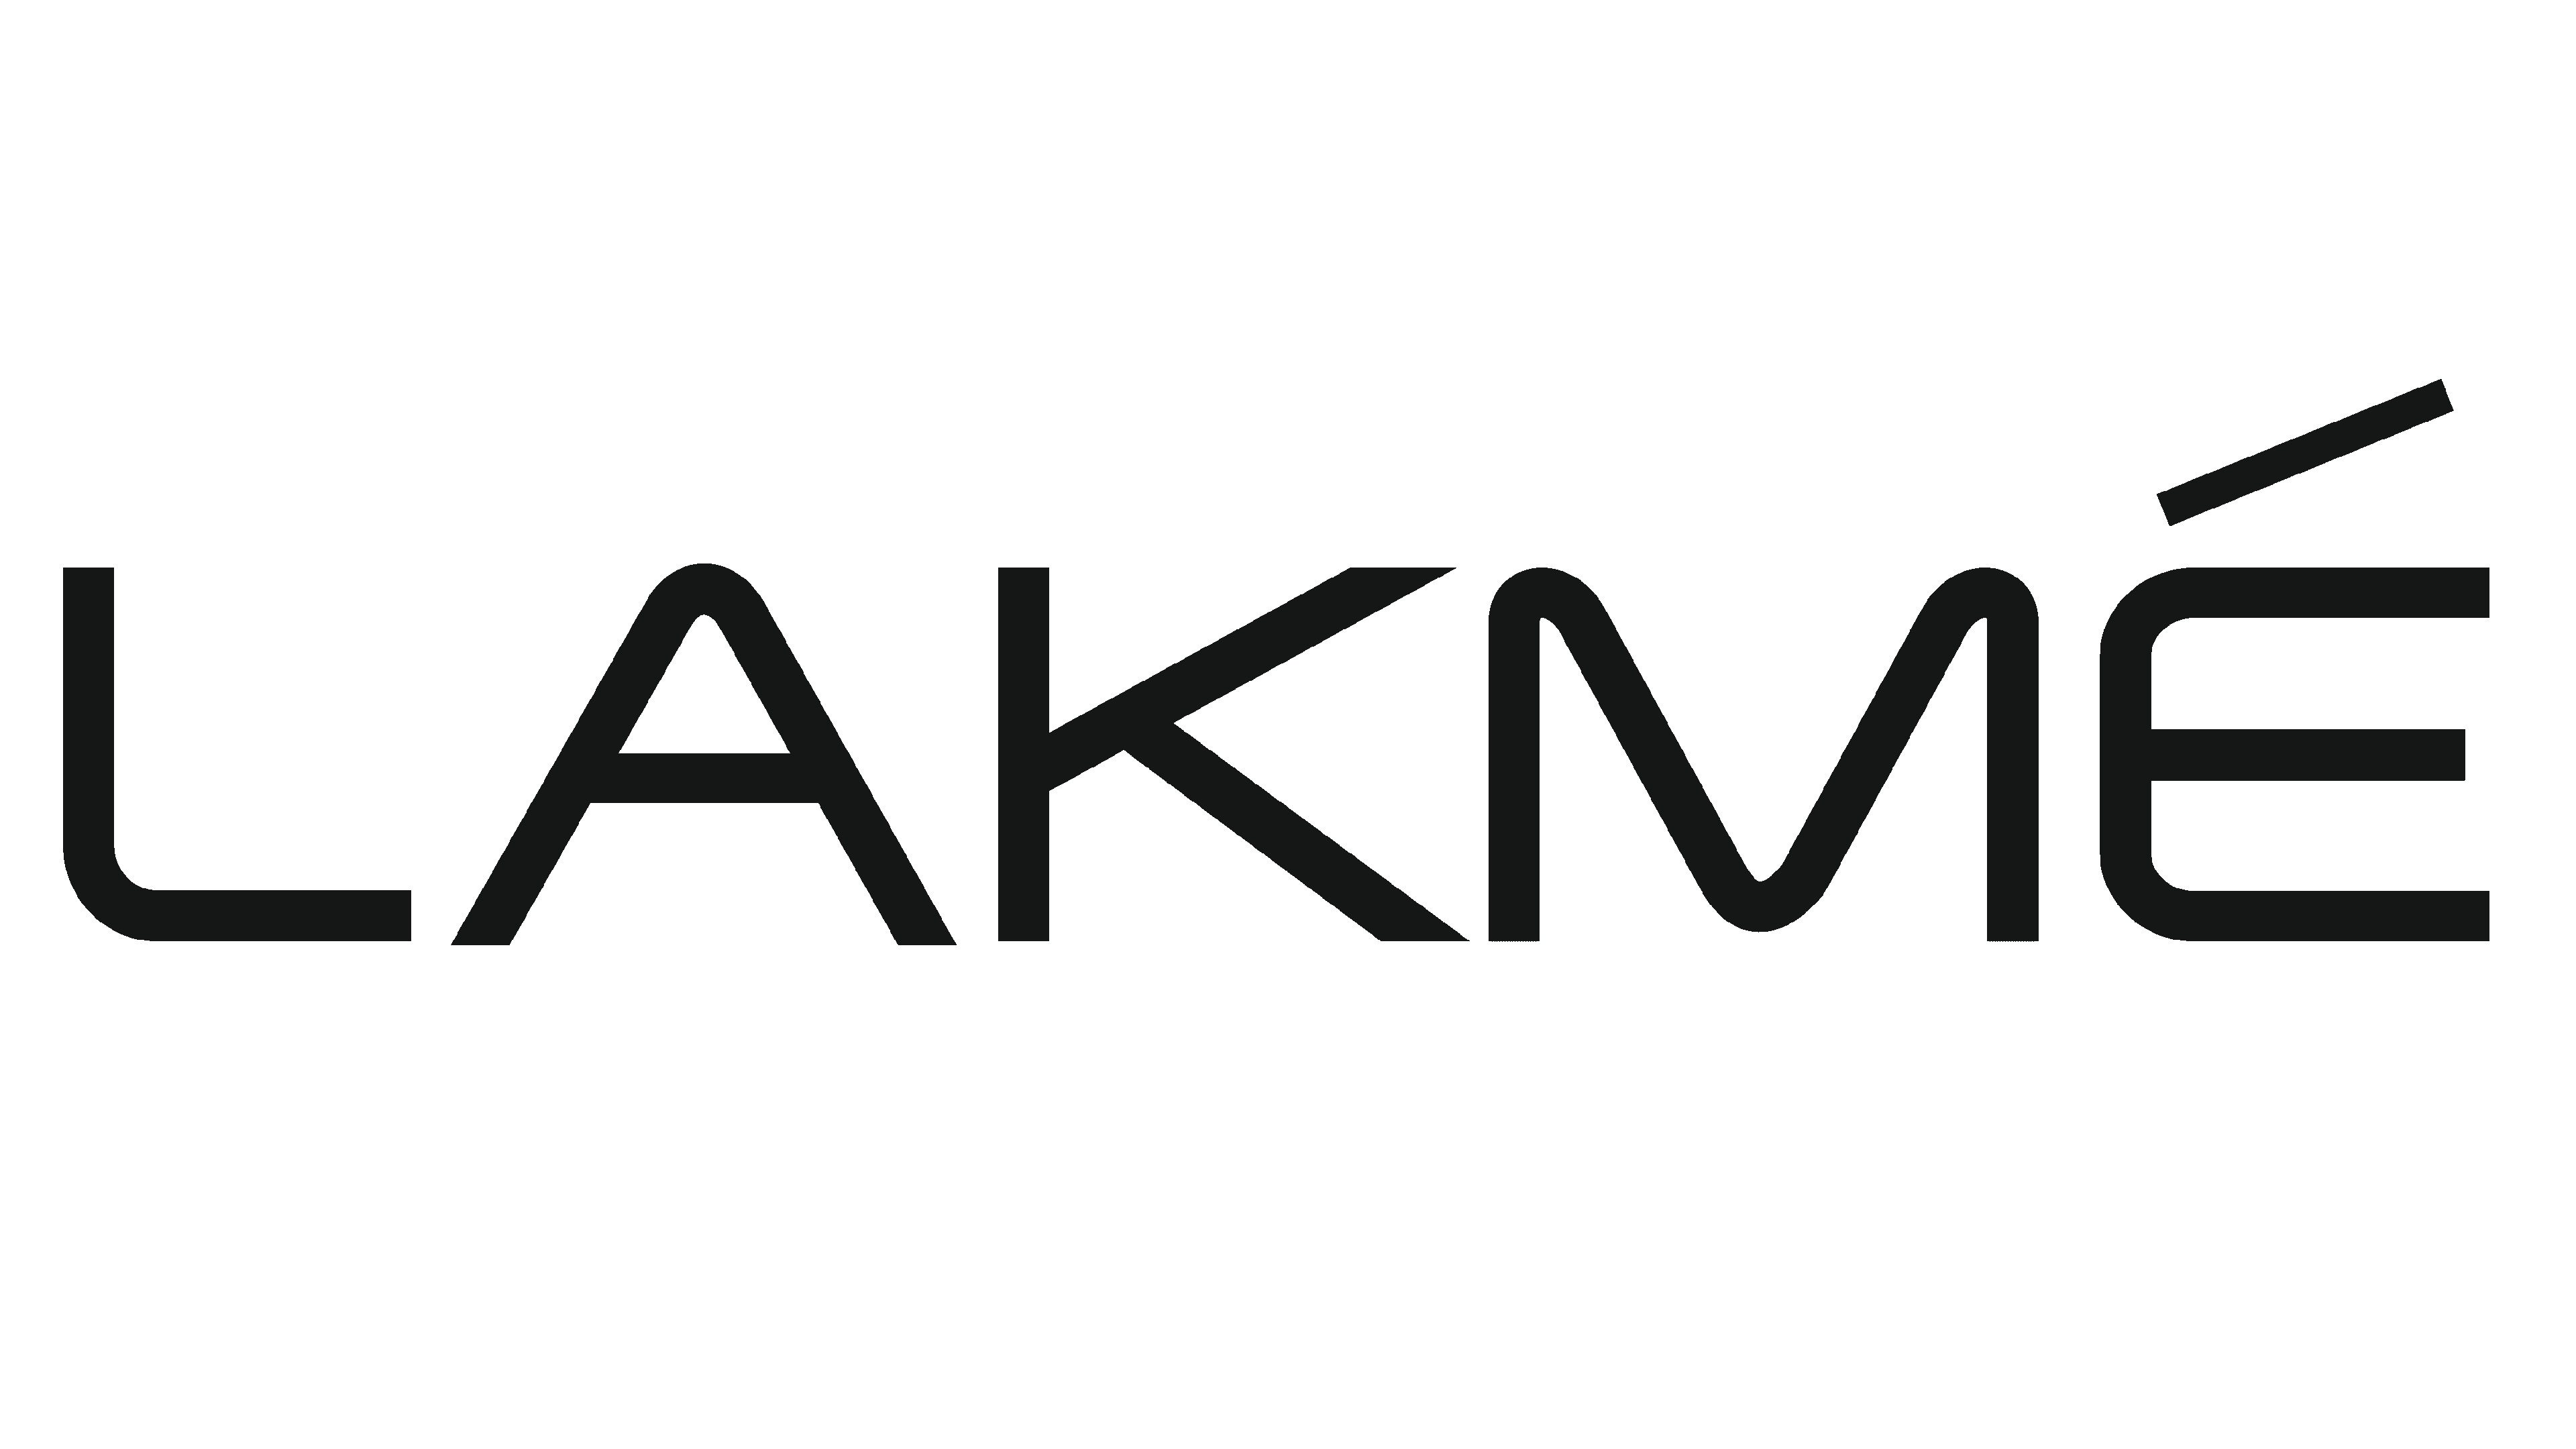 Download Lakmé Salons Logo PNG and Vector (PDF, SVG, Ai, EPS) Free